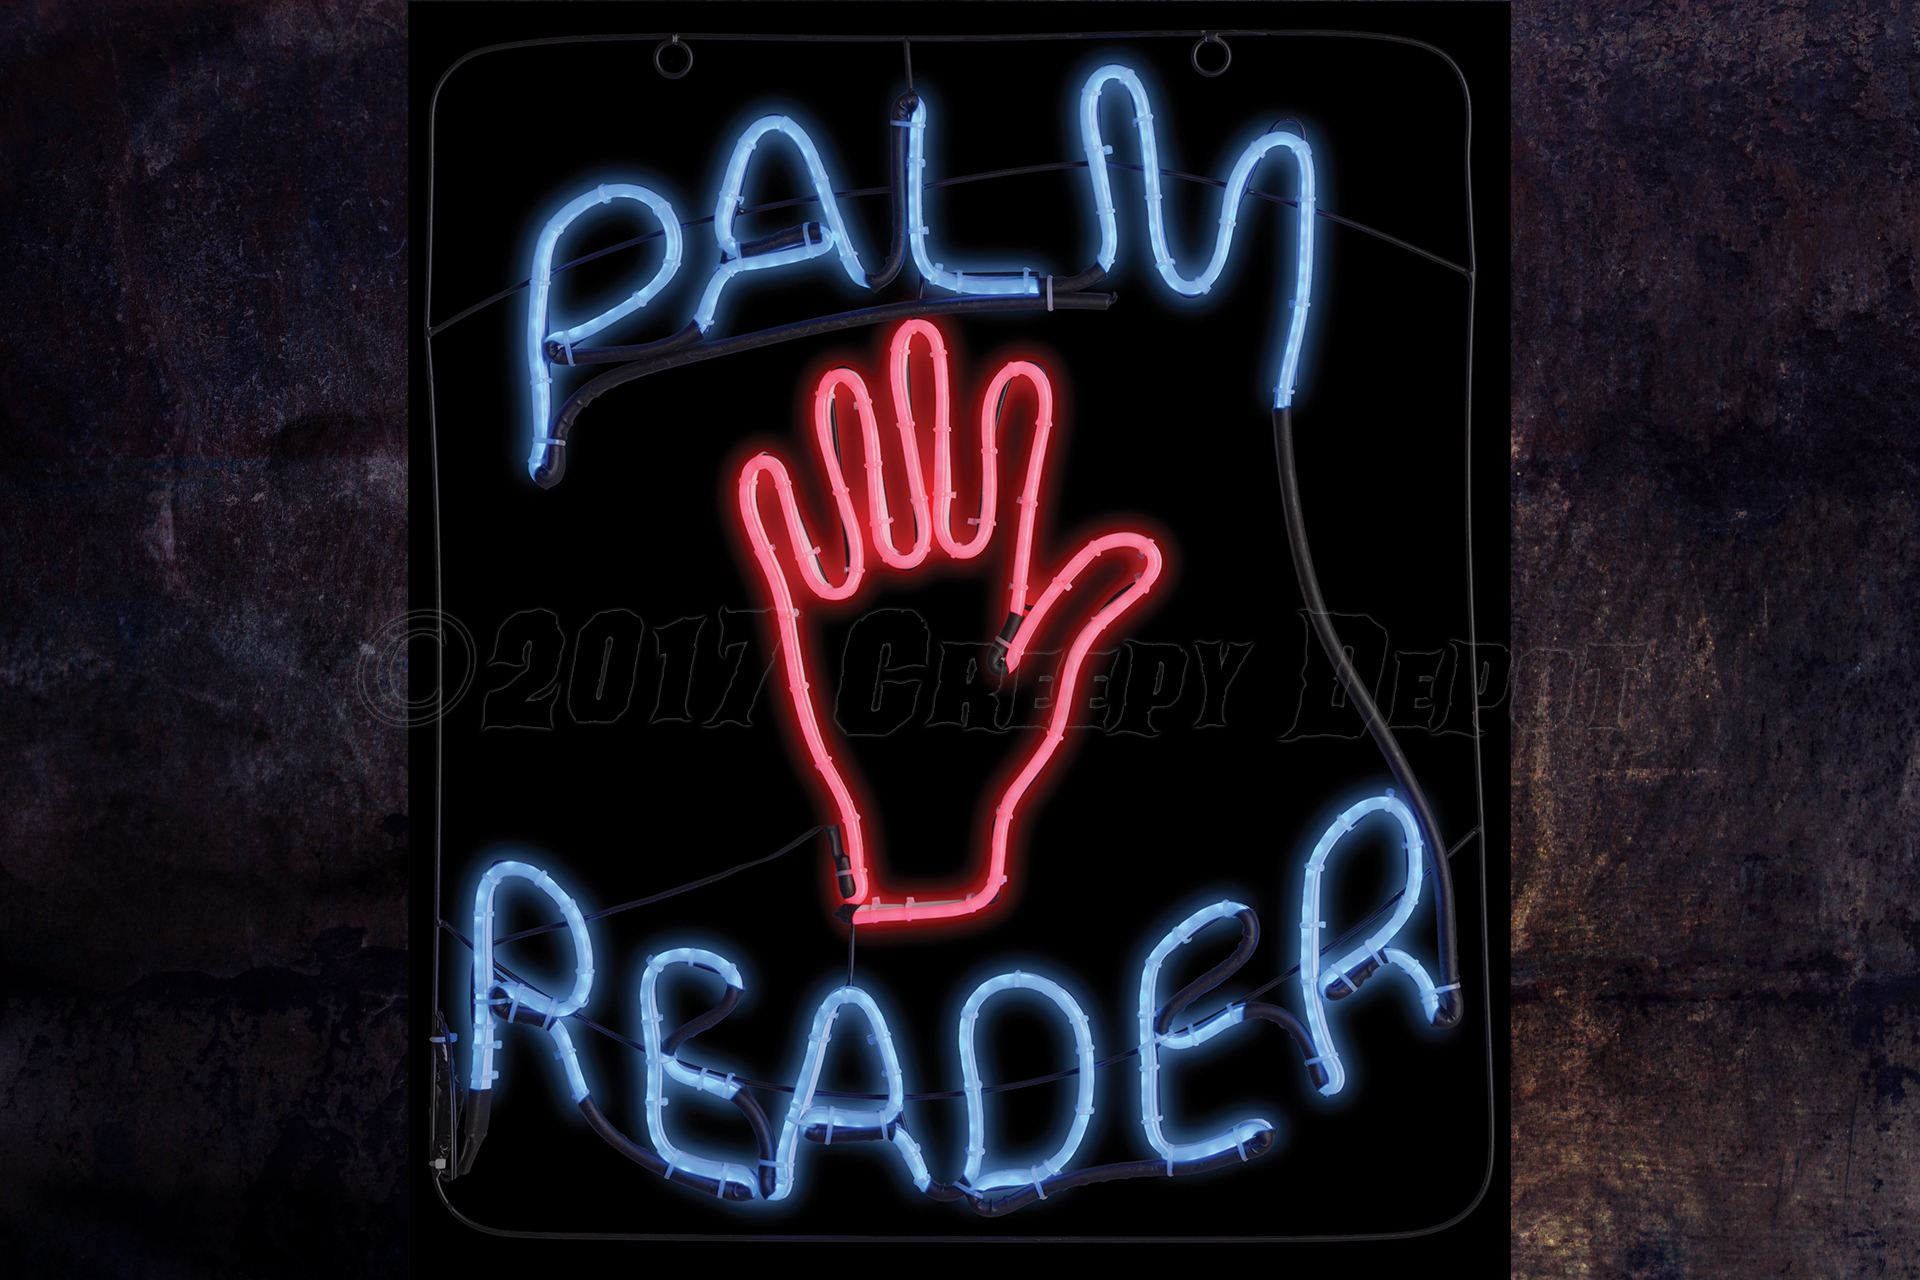 Palm Reader neon / LED sign